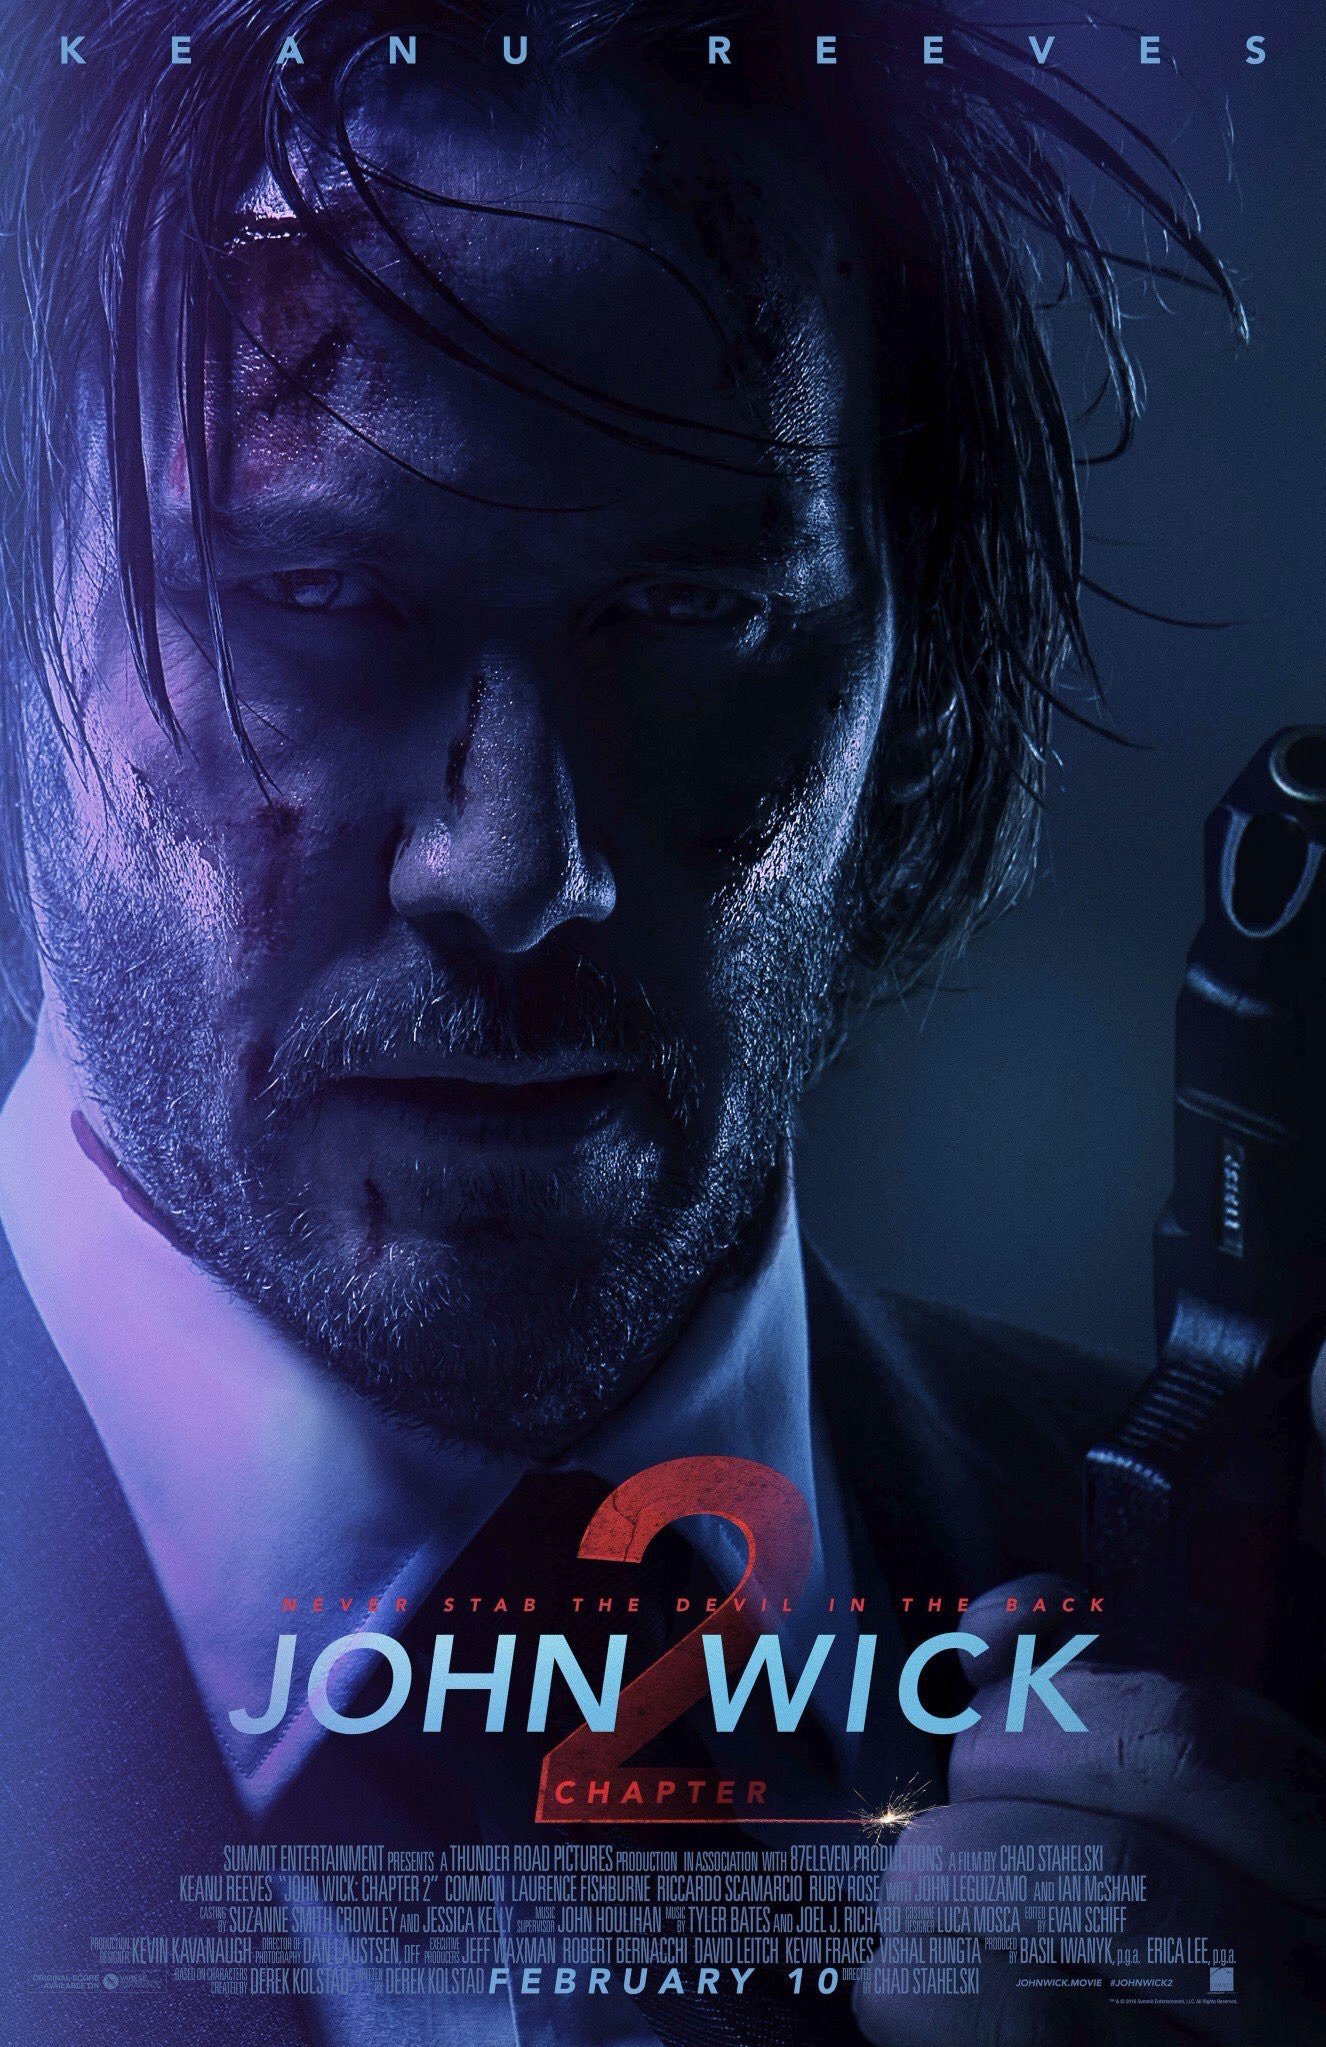 Poster de John Wick 2 avec la tagline 'Never stab the devil in the back'